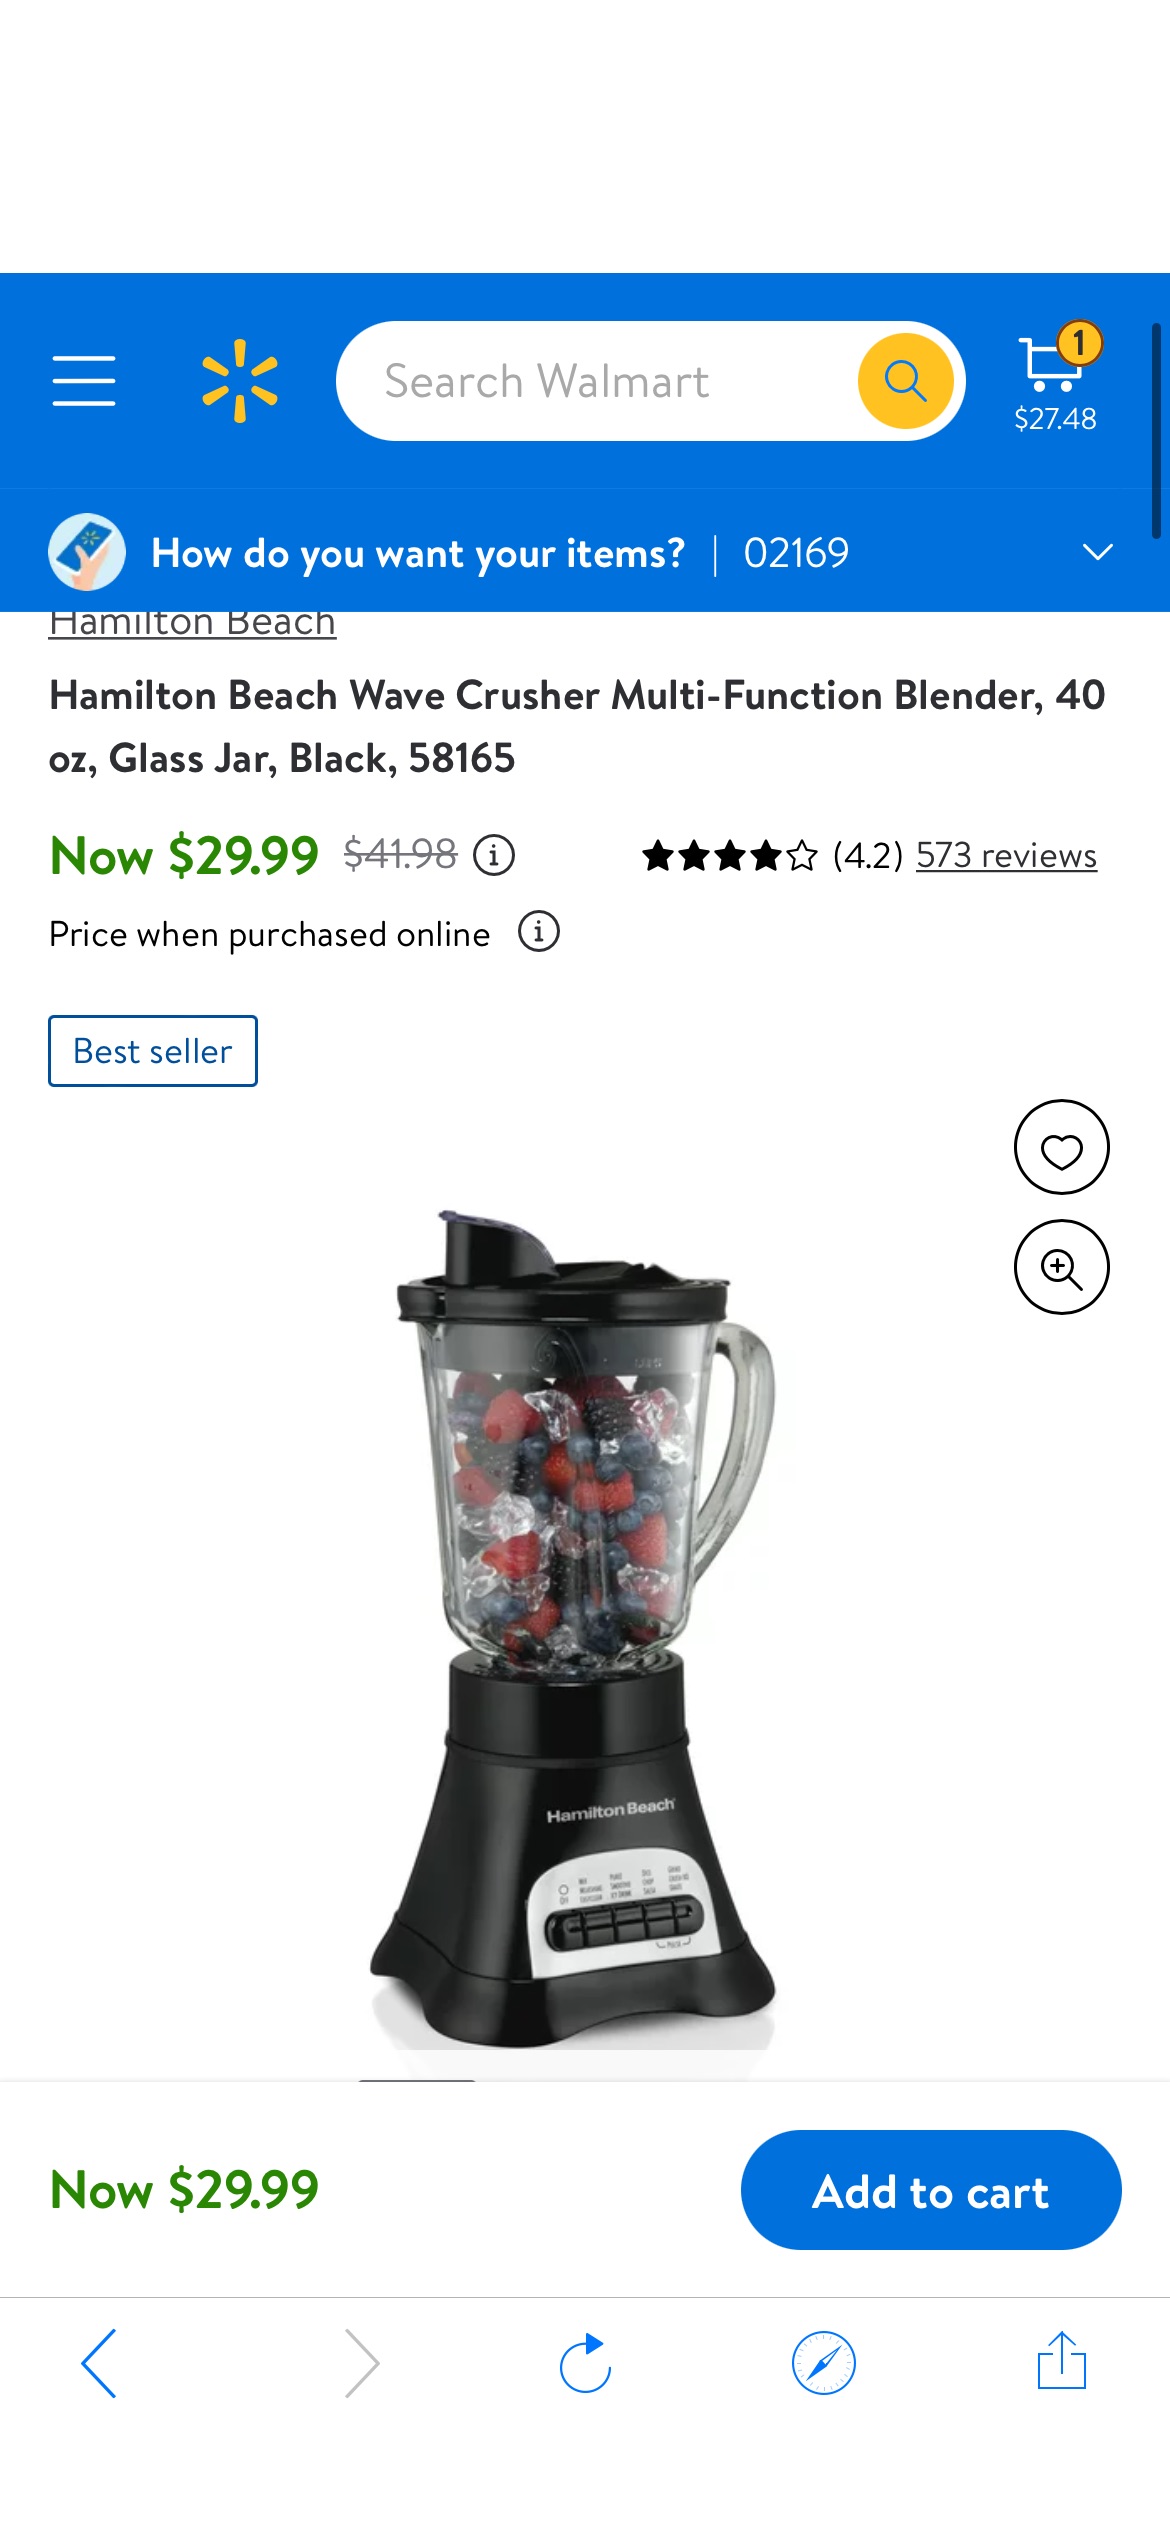 Hamilton Beach Wave Crusher Multi-Function Blender, 40 oz, Glass Jar, Black, 58165 - Walmart.com